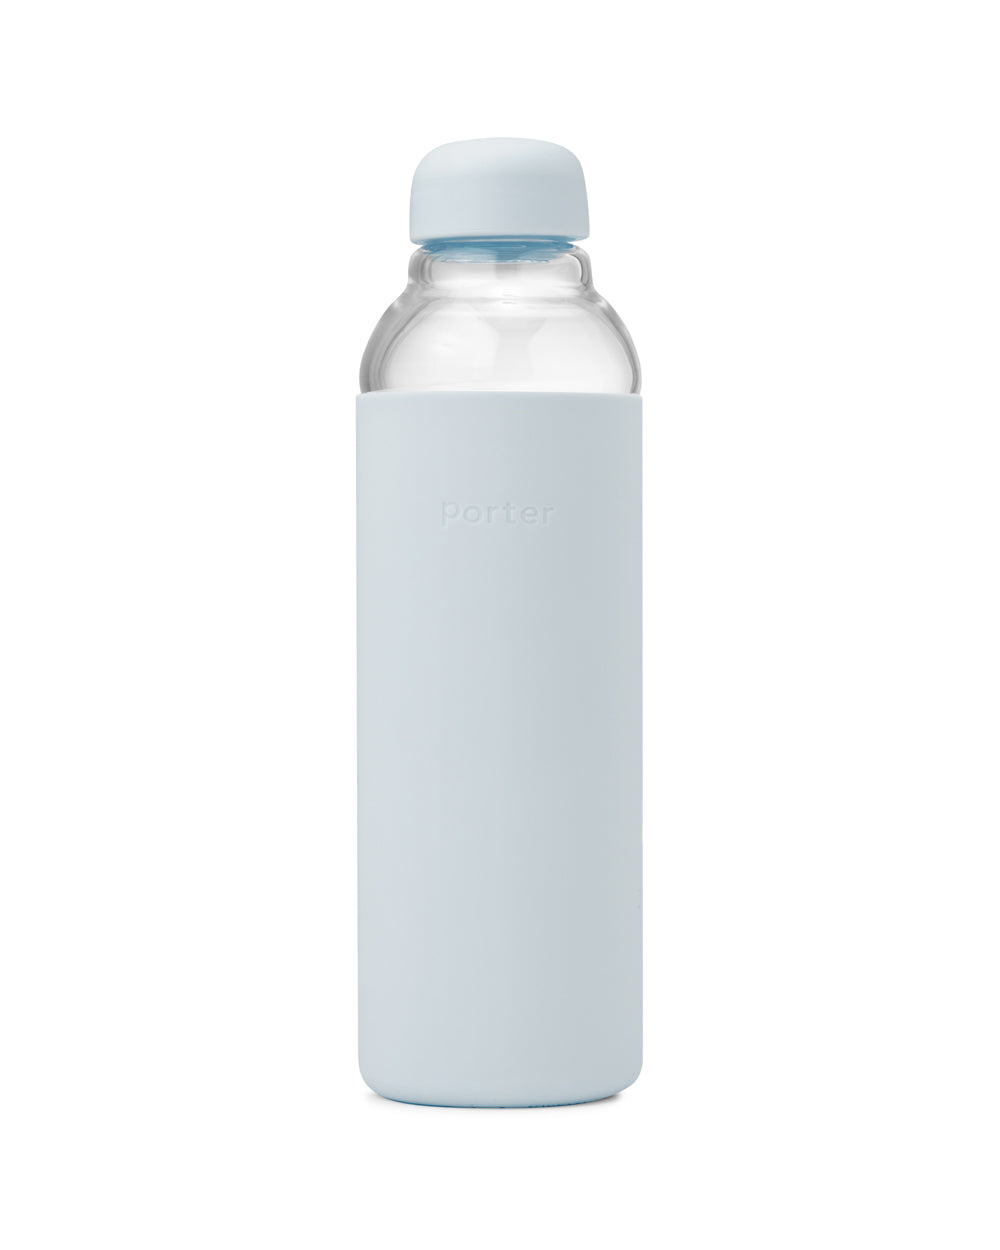 W&P - Porter Water Bottle – The Girls @ Los Altos